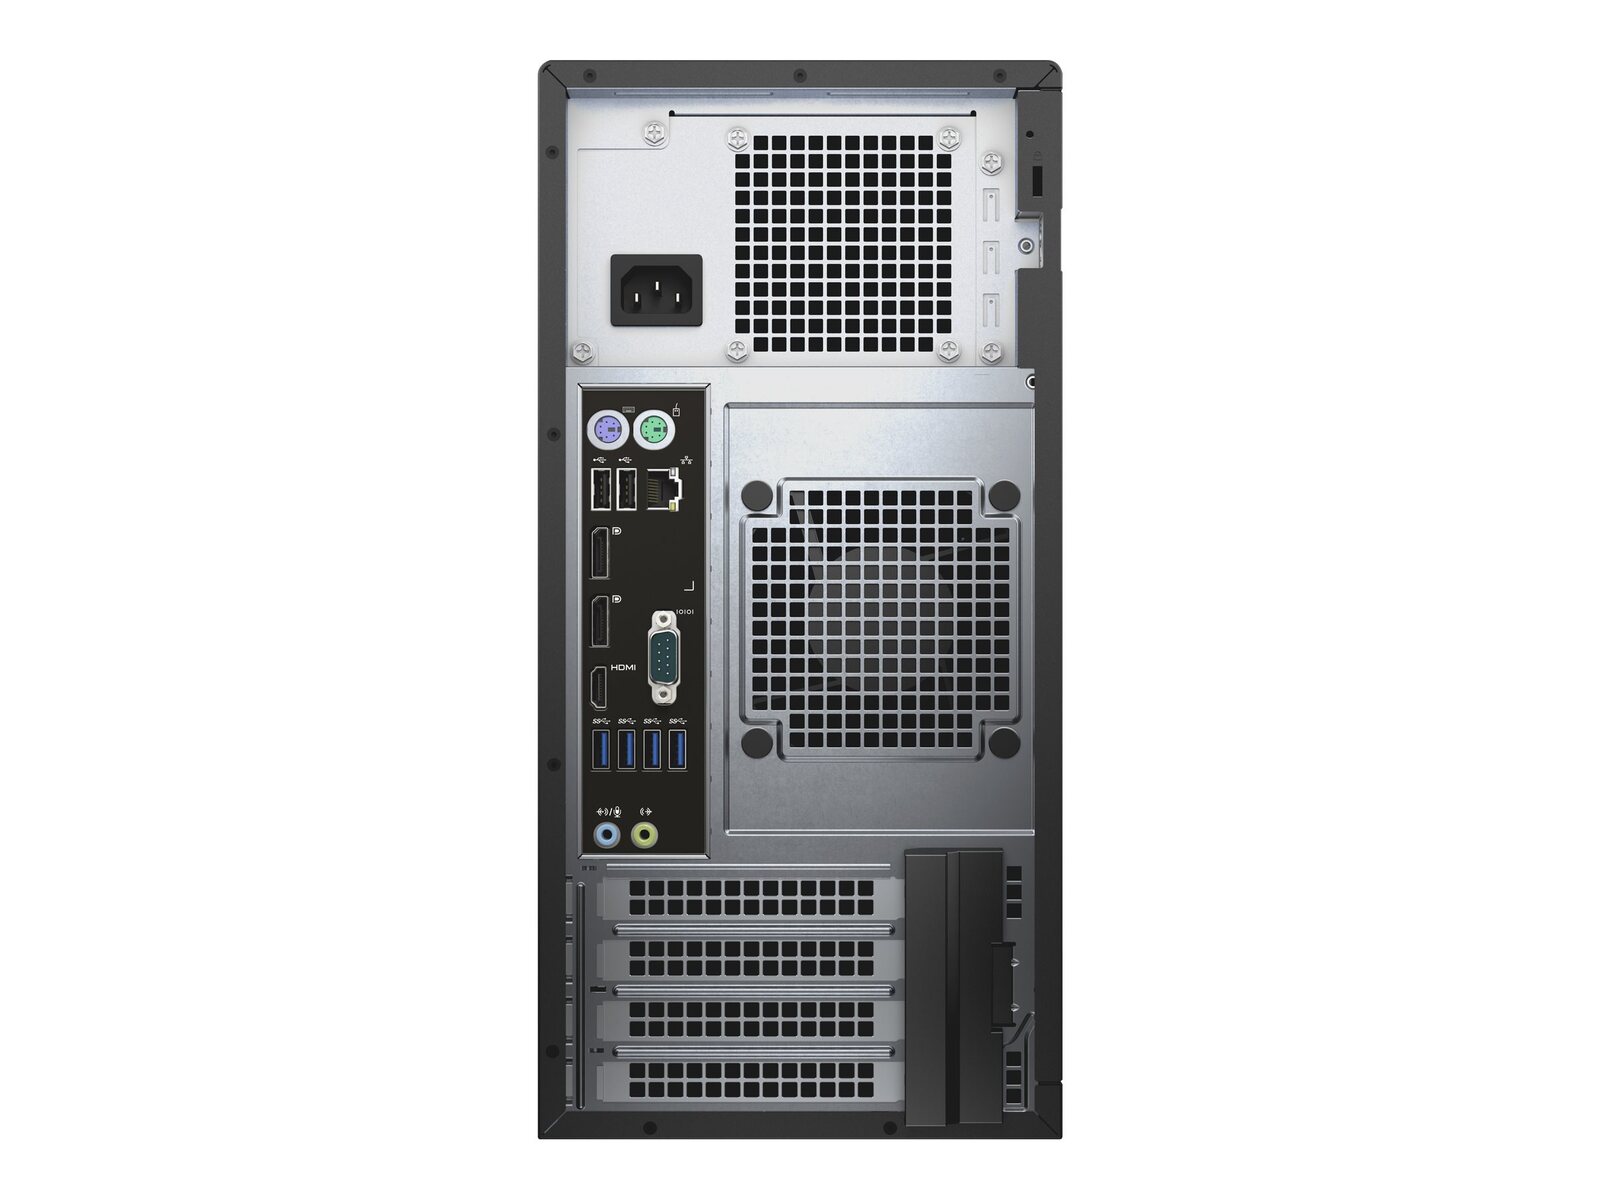 Dell Precision Tower 3620 Intel i7 6700 3.40GHz 16GB RAM 256GB SSD Win 10 Image 1